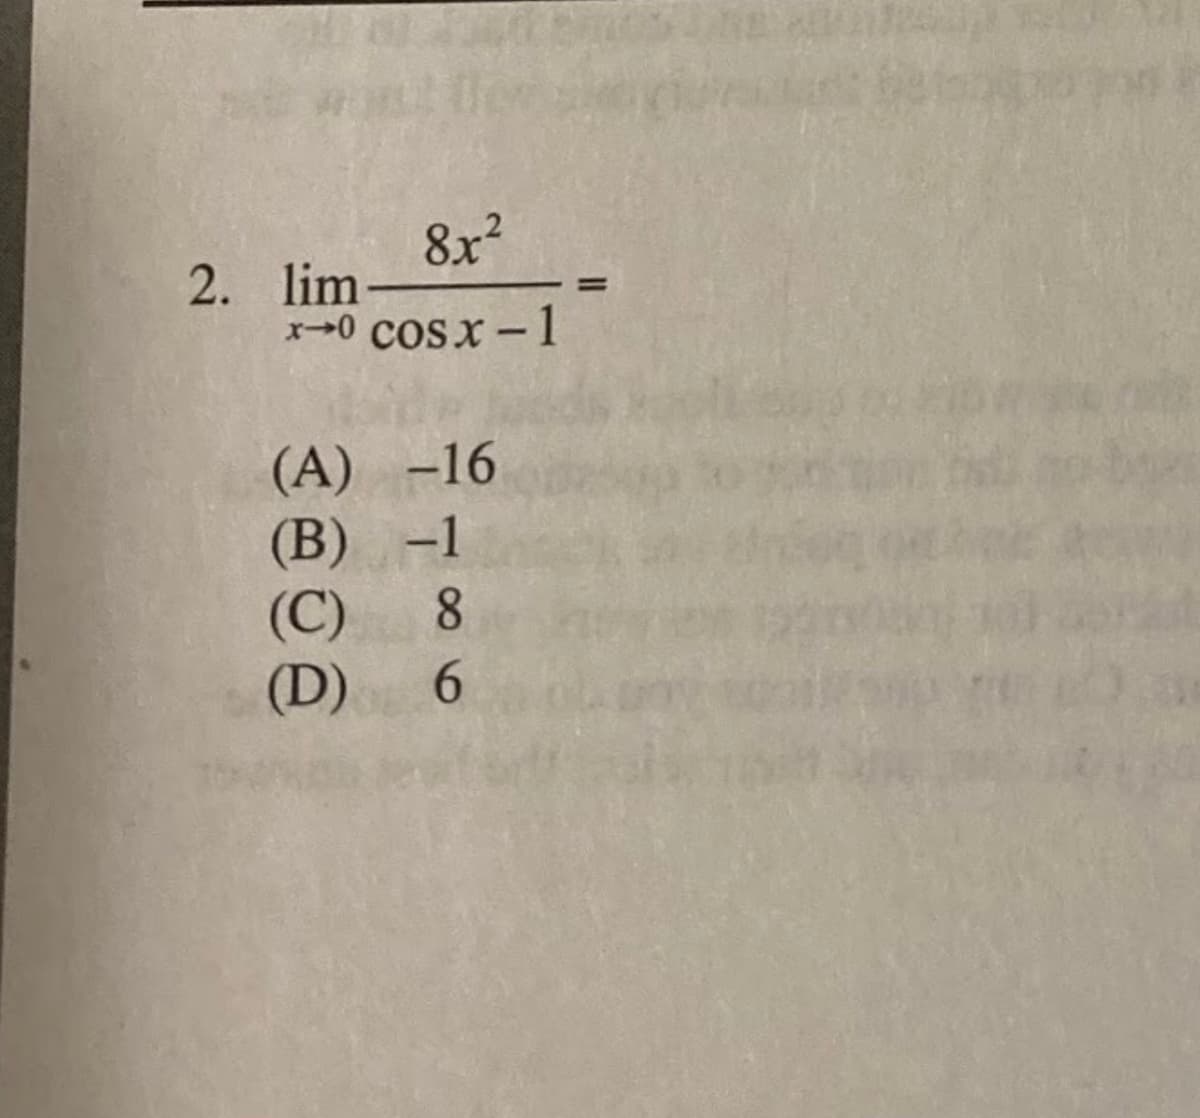 8x?
2. lim
x-0 cosx -1
(A) -16
(B) -1
(C)
(D)
8.
6.
